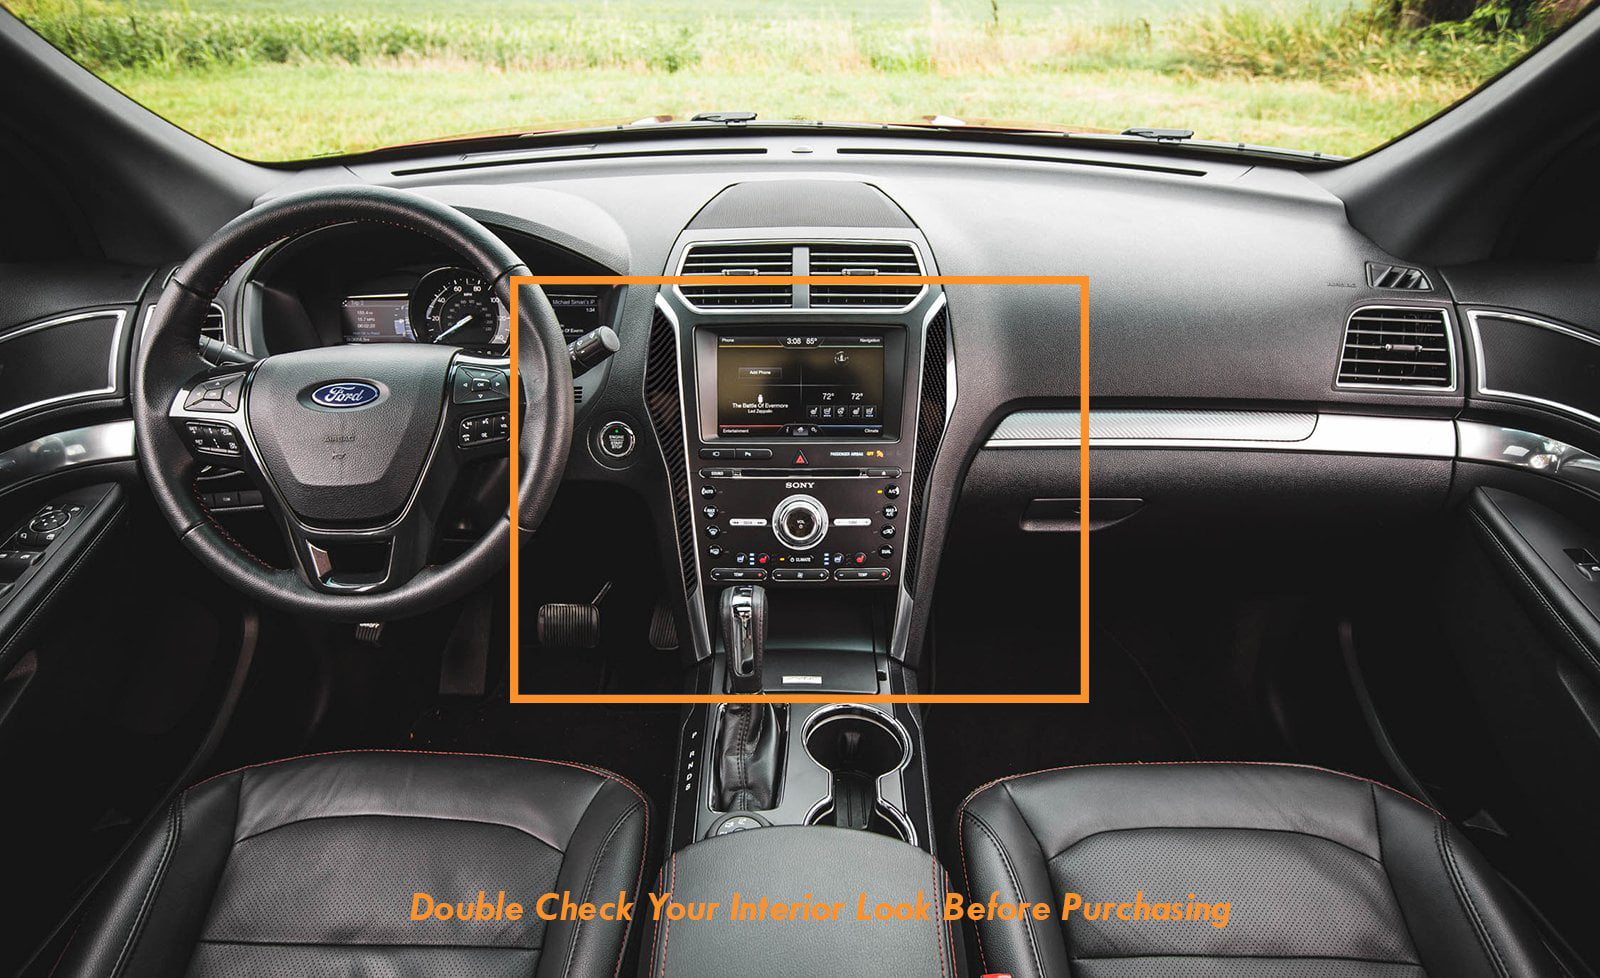 SUNJIKA Compatible with 1PCS Carbon Fiber Center Console GPS Navigation Panel Cover Trim Sticker for Ford Explorer 2013 2014 2015 2016 2017 2018 Red 